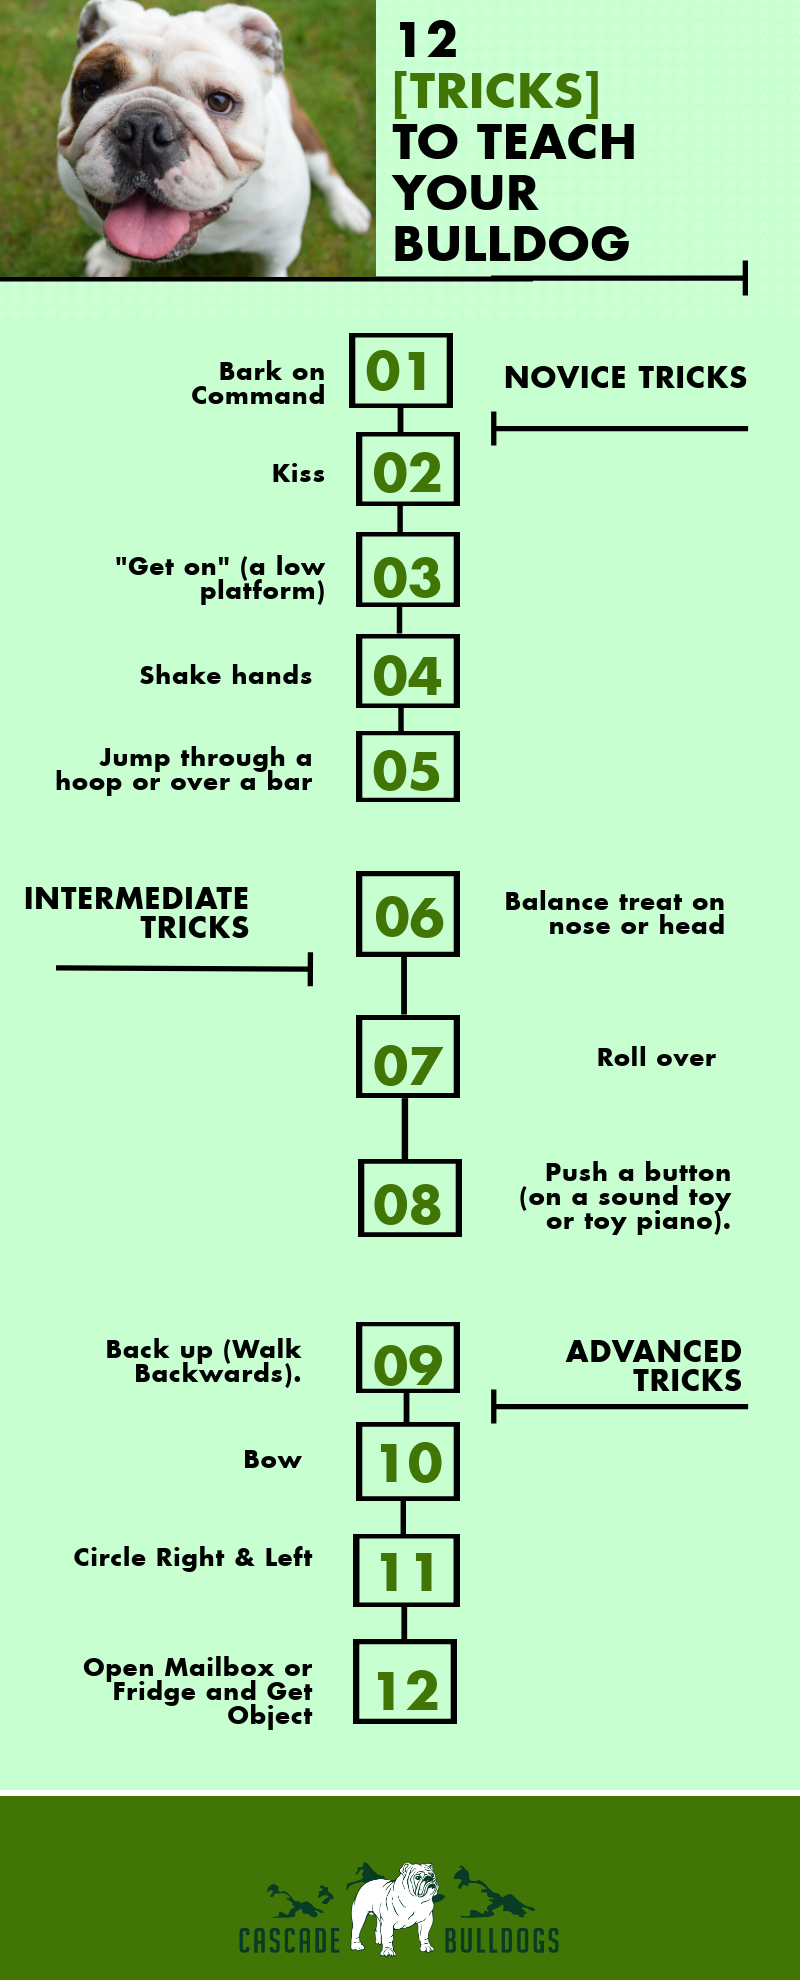 12 tricks to teach your bulldog infographic